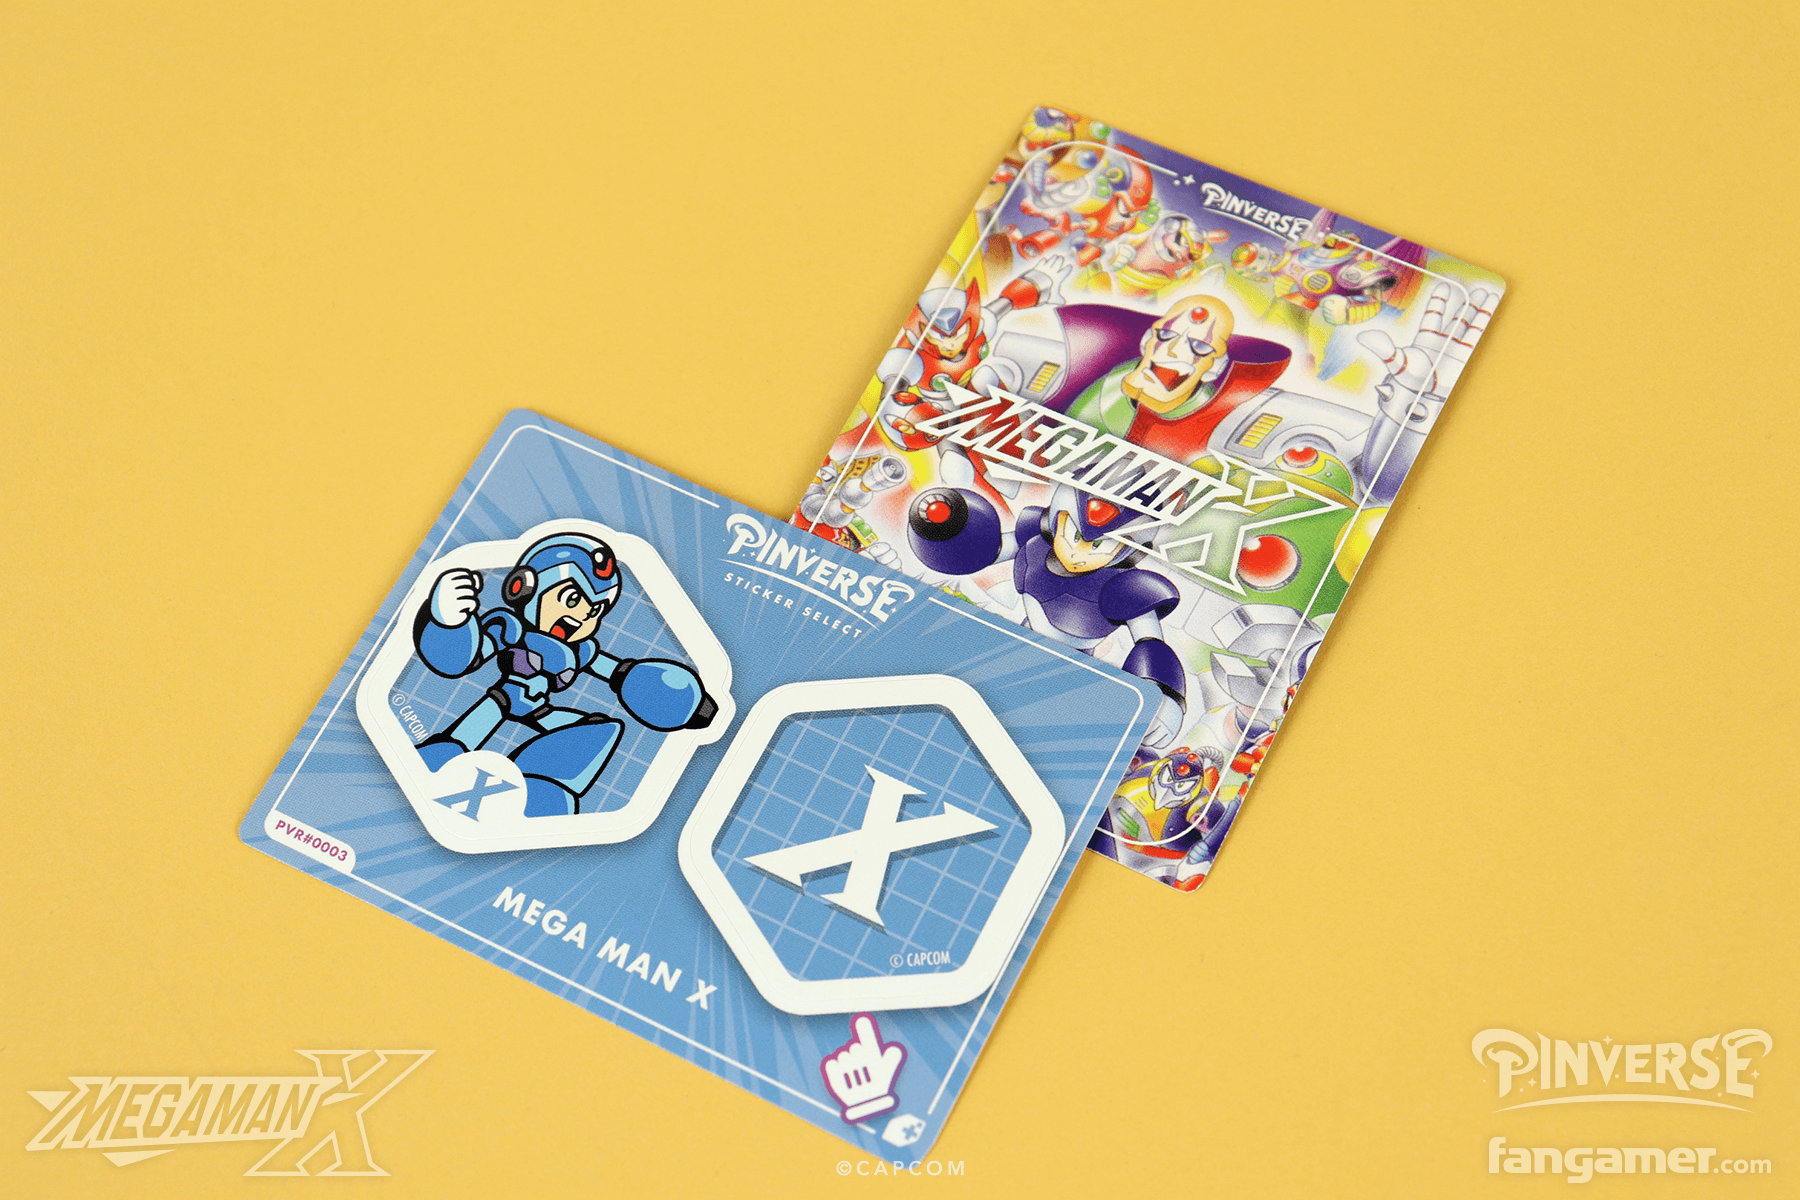 PINVERSE - Mega Man X Pin Pack - Fangamer